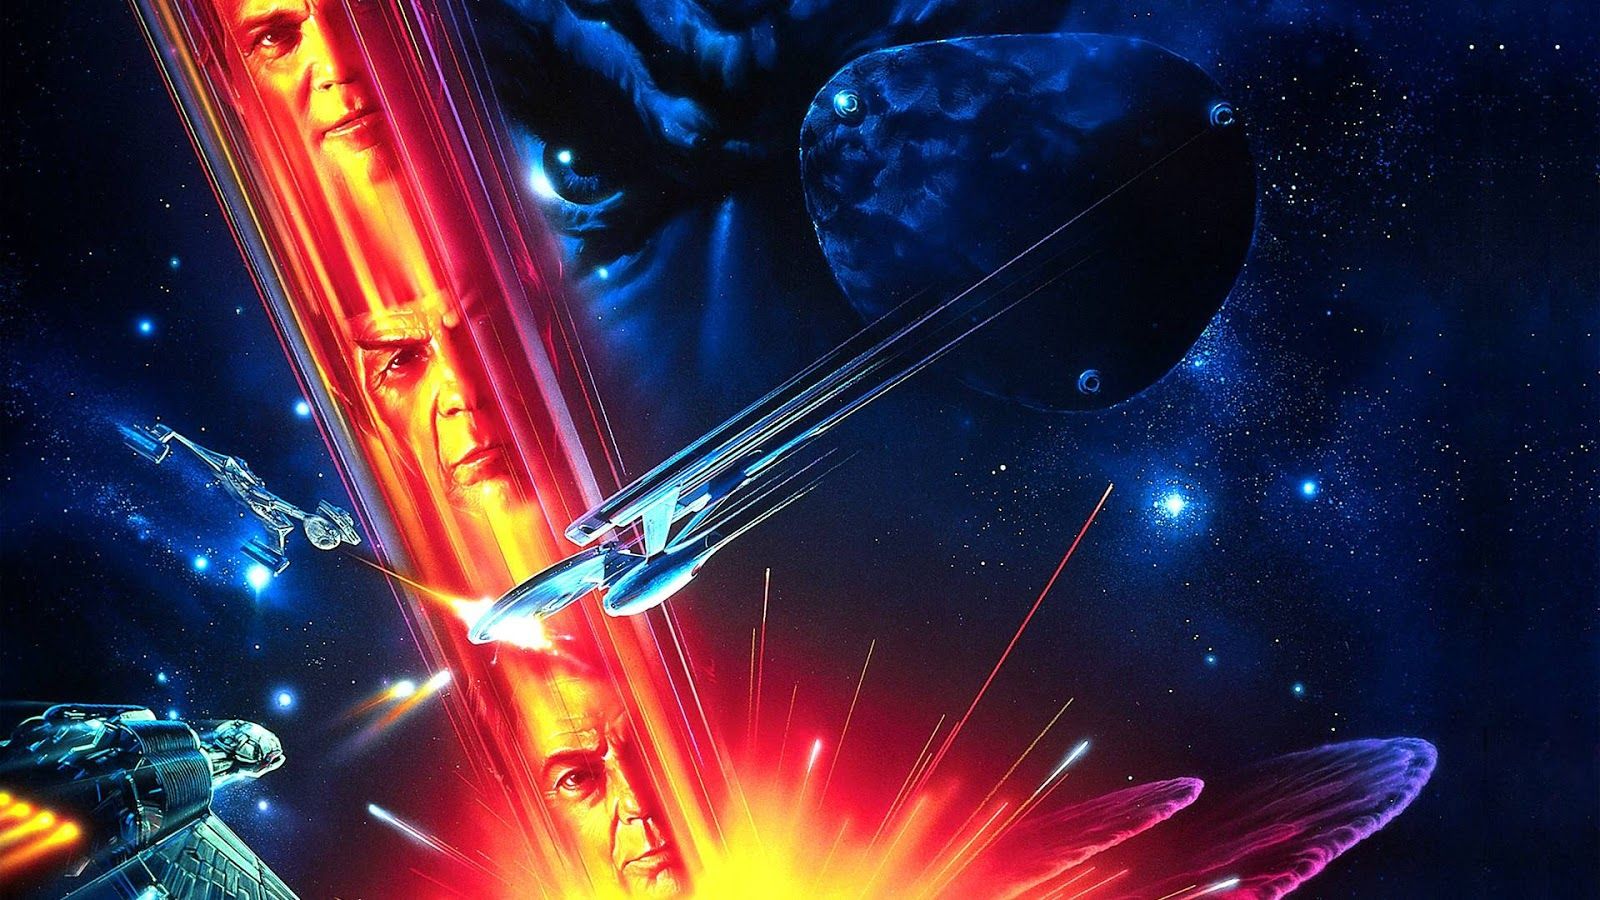 HD Star Trek Wallpaper for Desktop (2020)